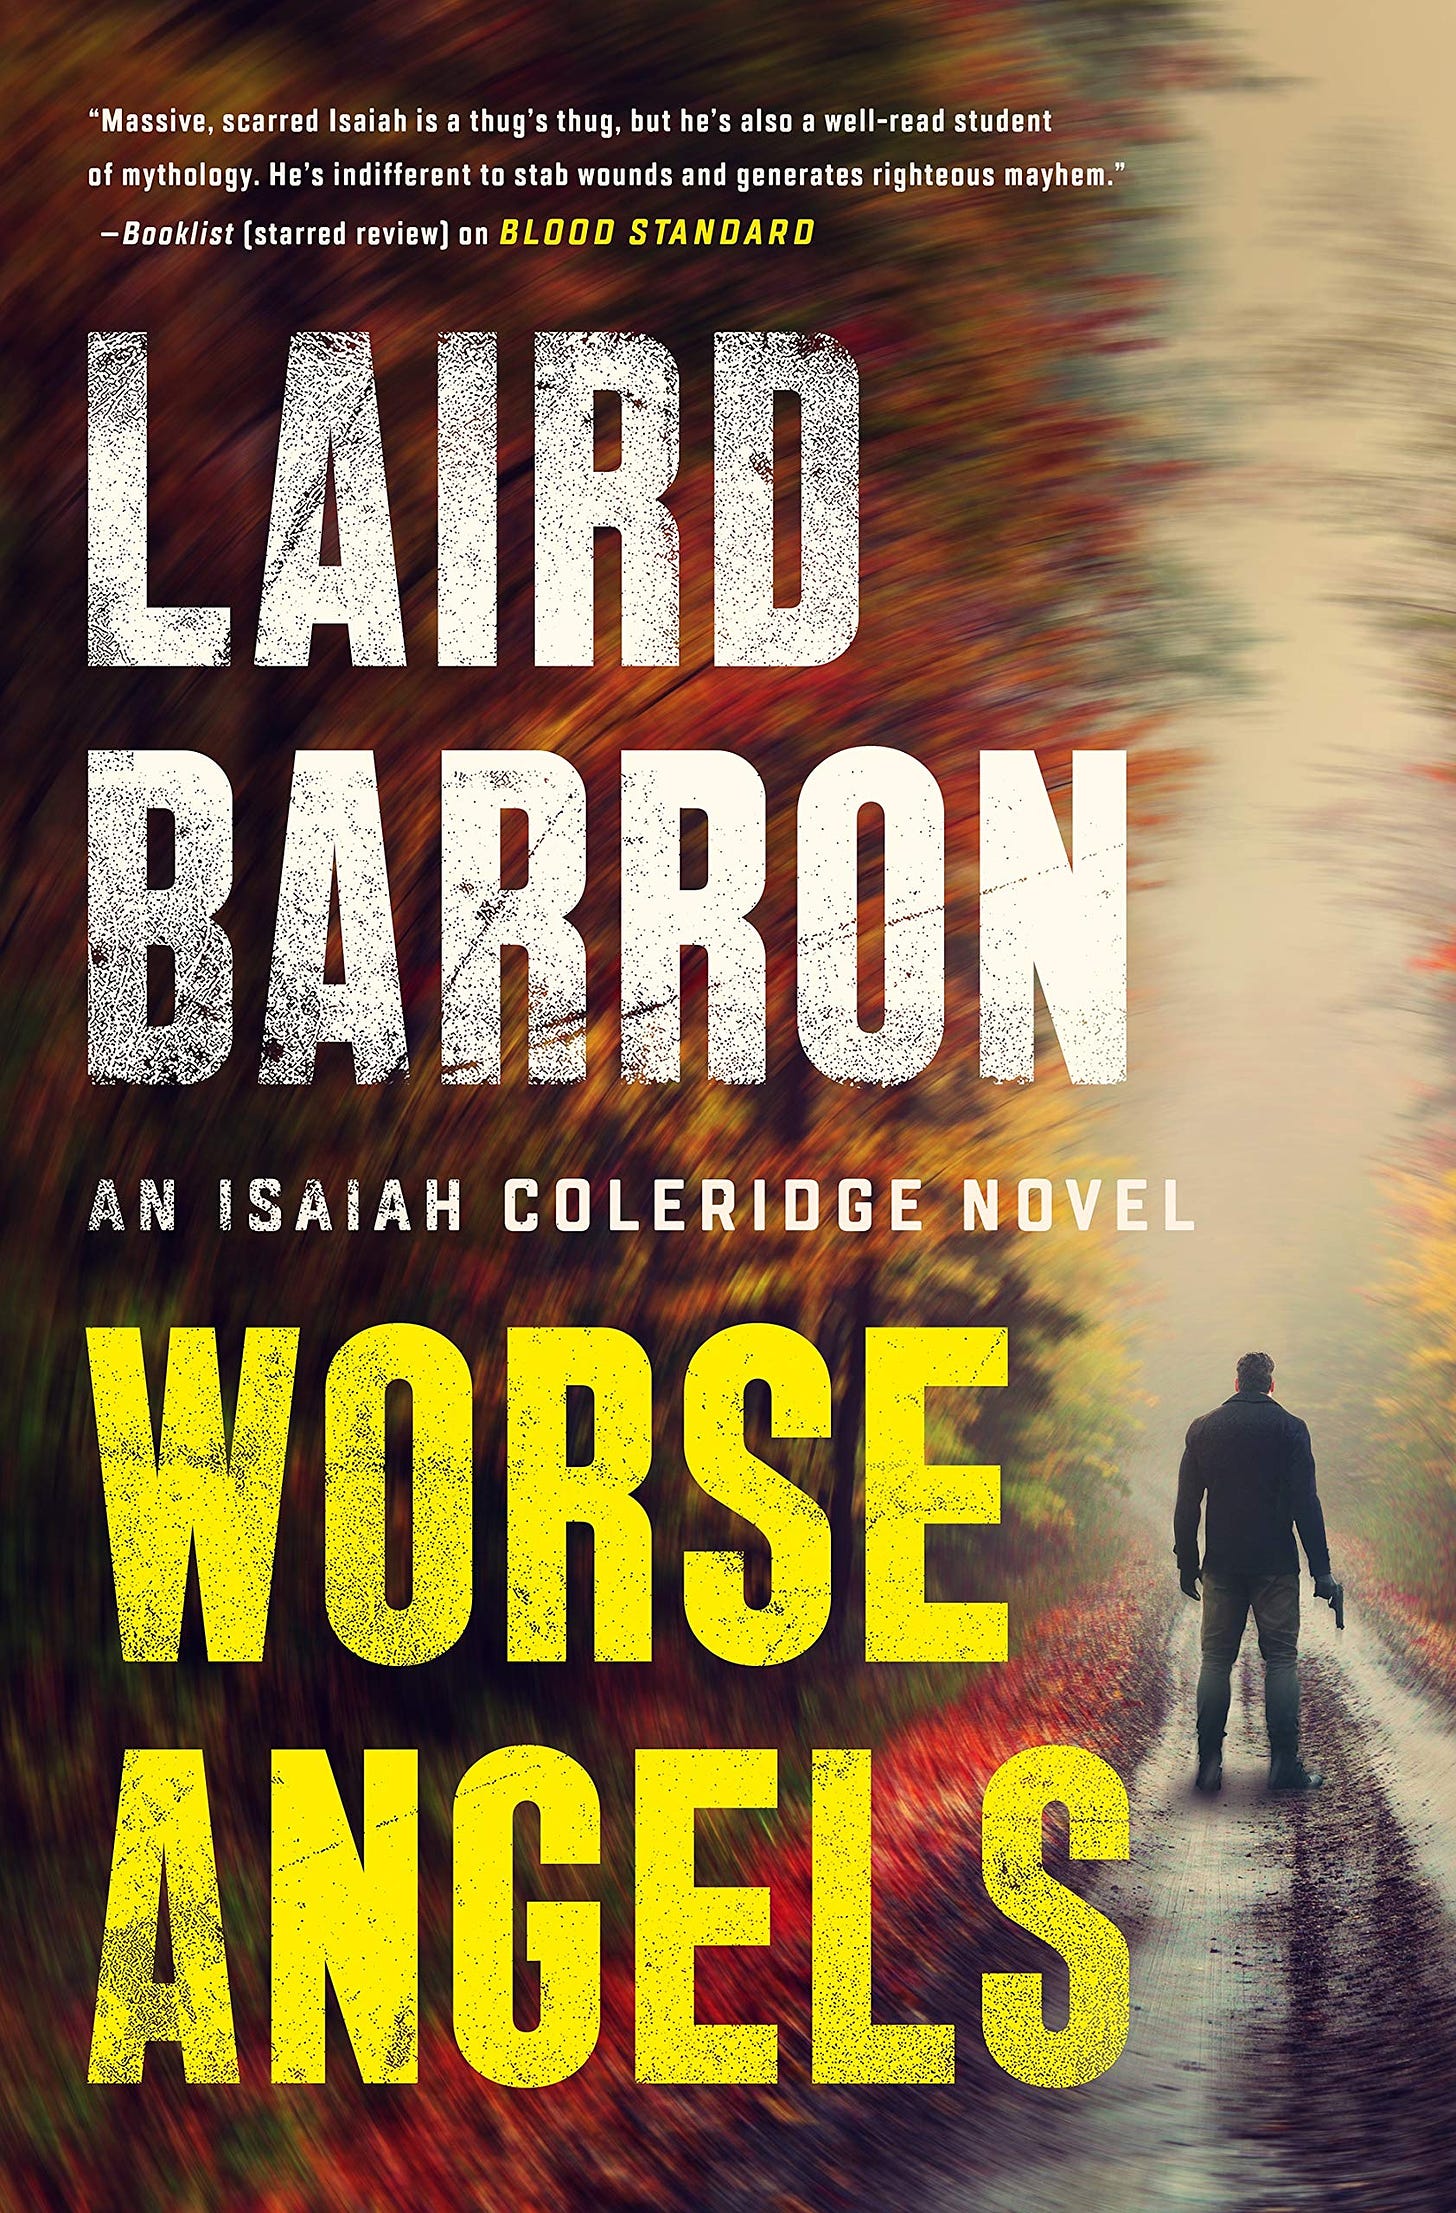 Amazon.com: Worse Angels (An Isaiah Coleridge Novel ...